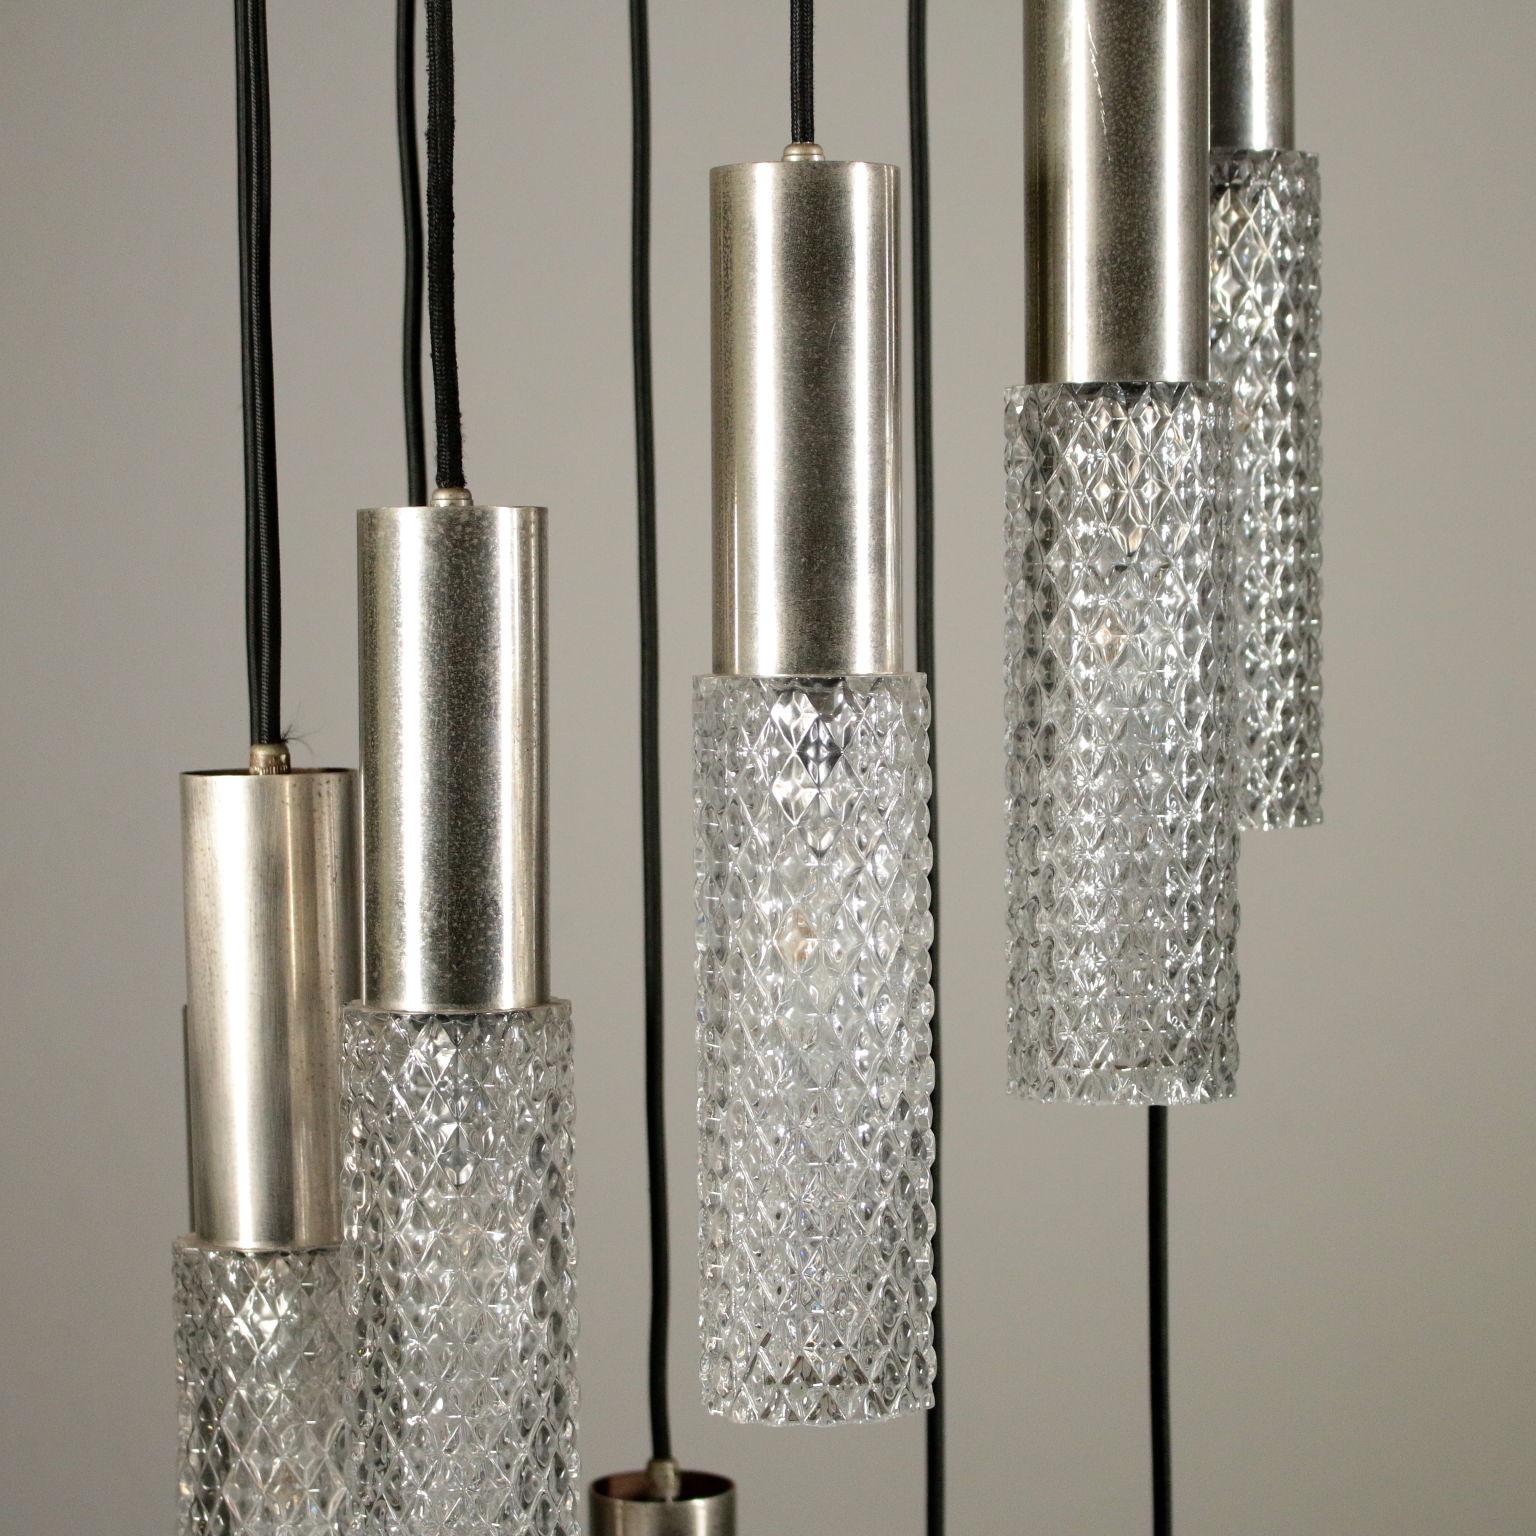 Chandelier Metal Glass Vintage Manufactured in Italy, 1960s (Moderne der Mitte des Jahrhunderts)